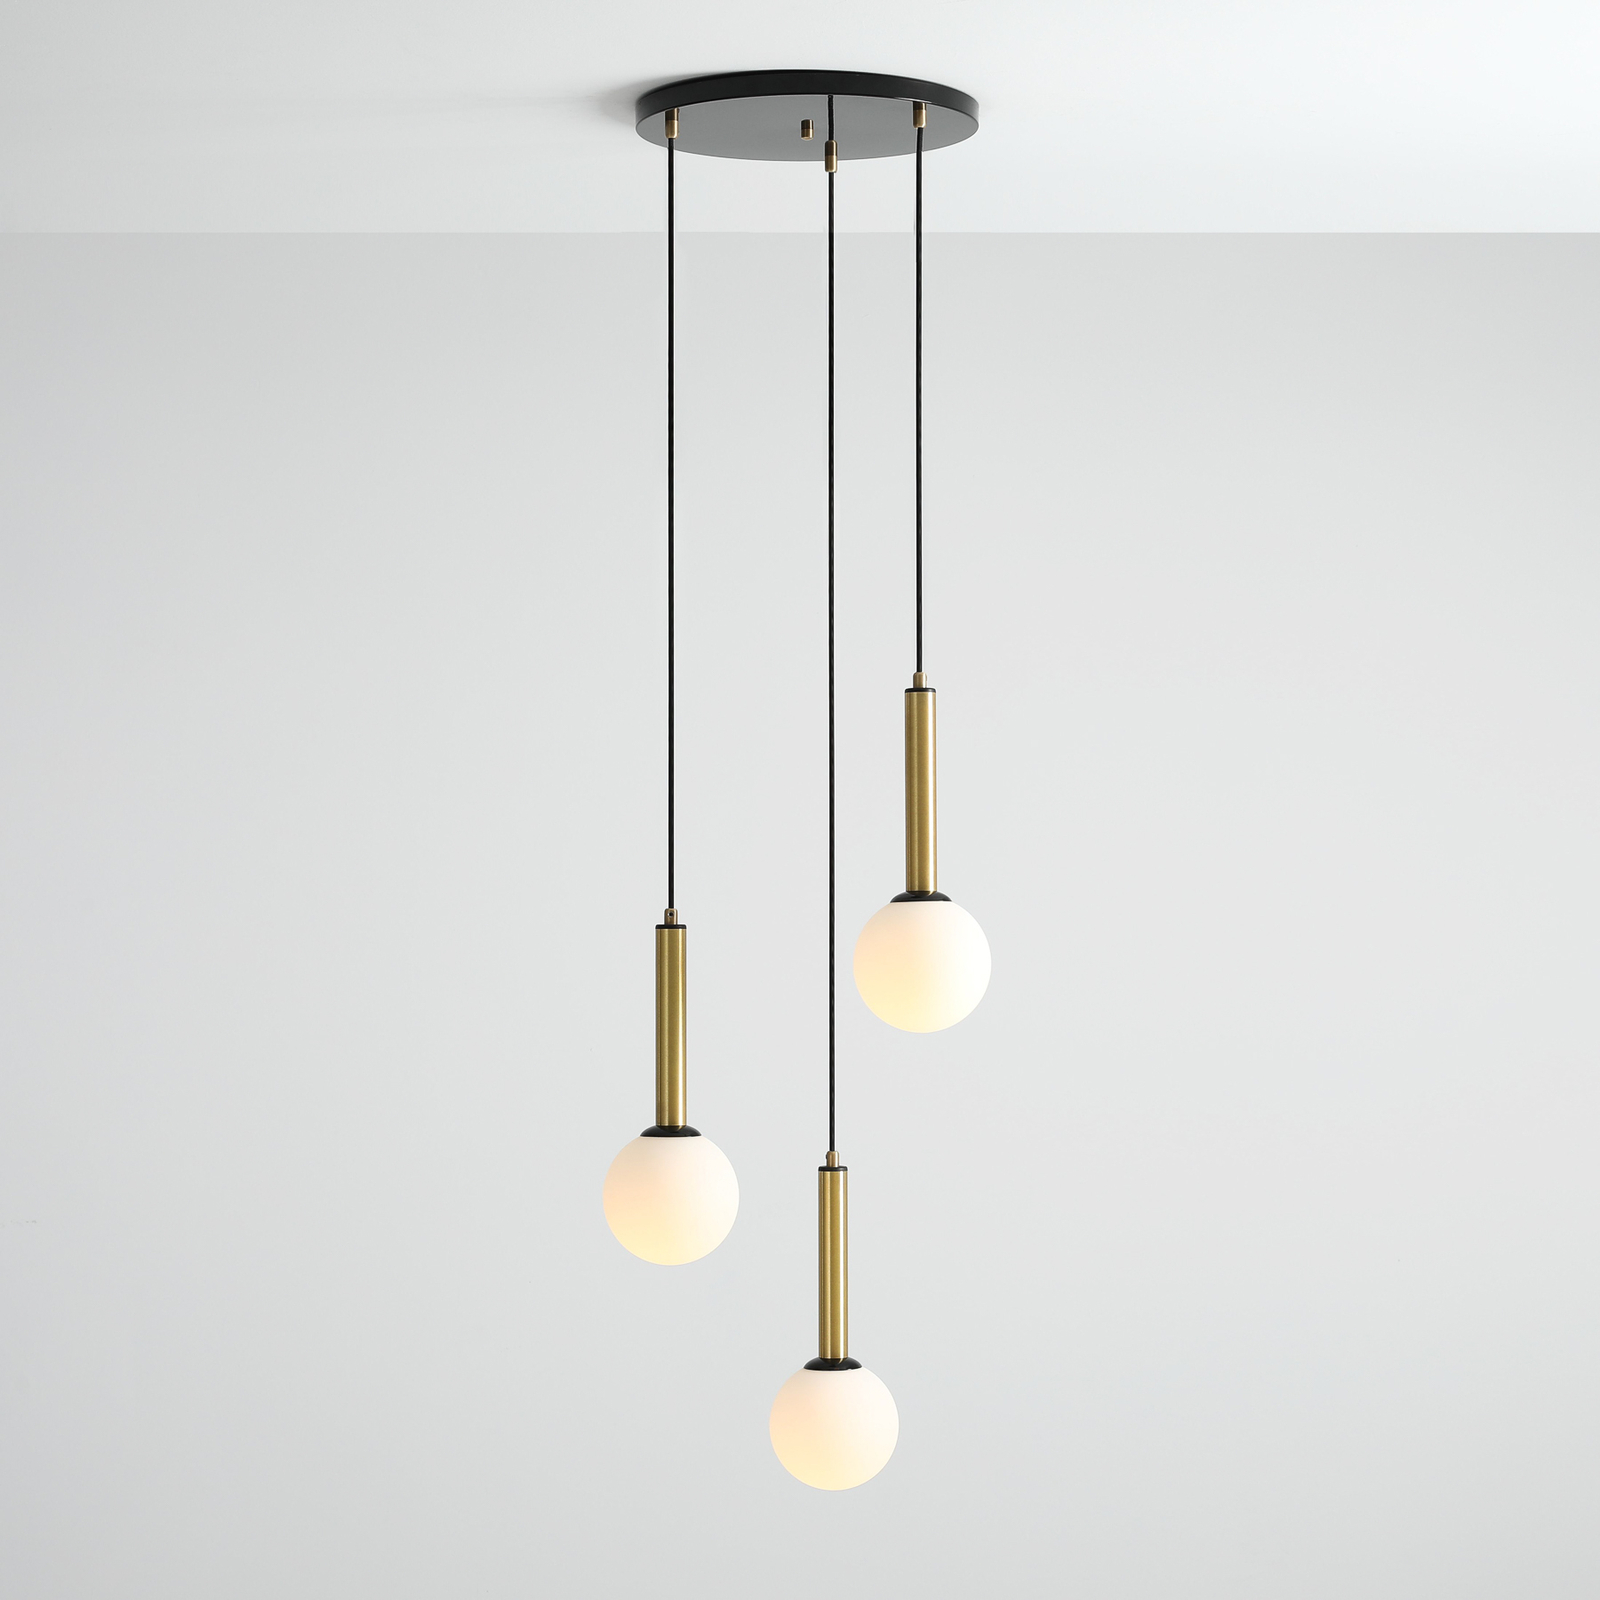 Hanglamp 1098E_1, 3-lamps, zwart/messing